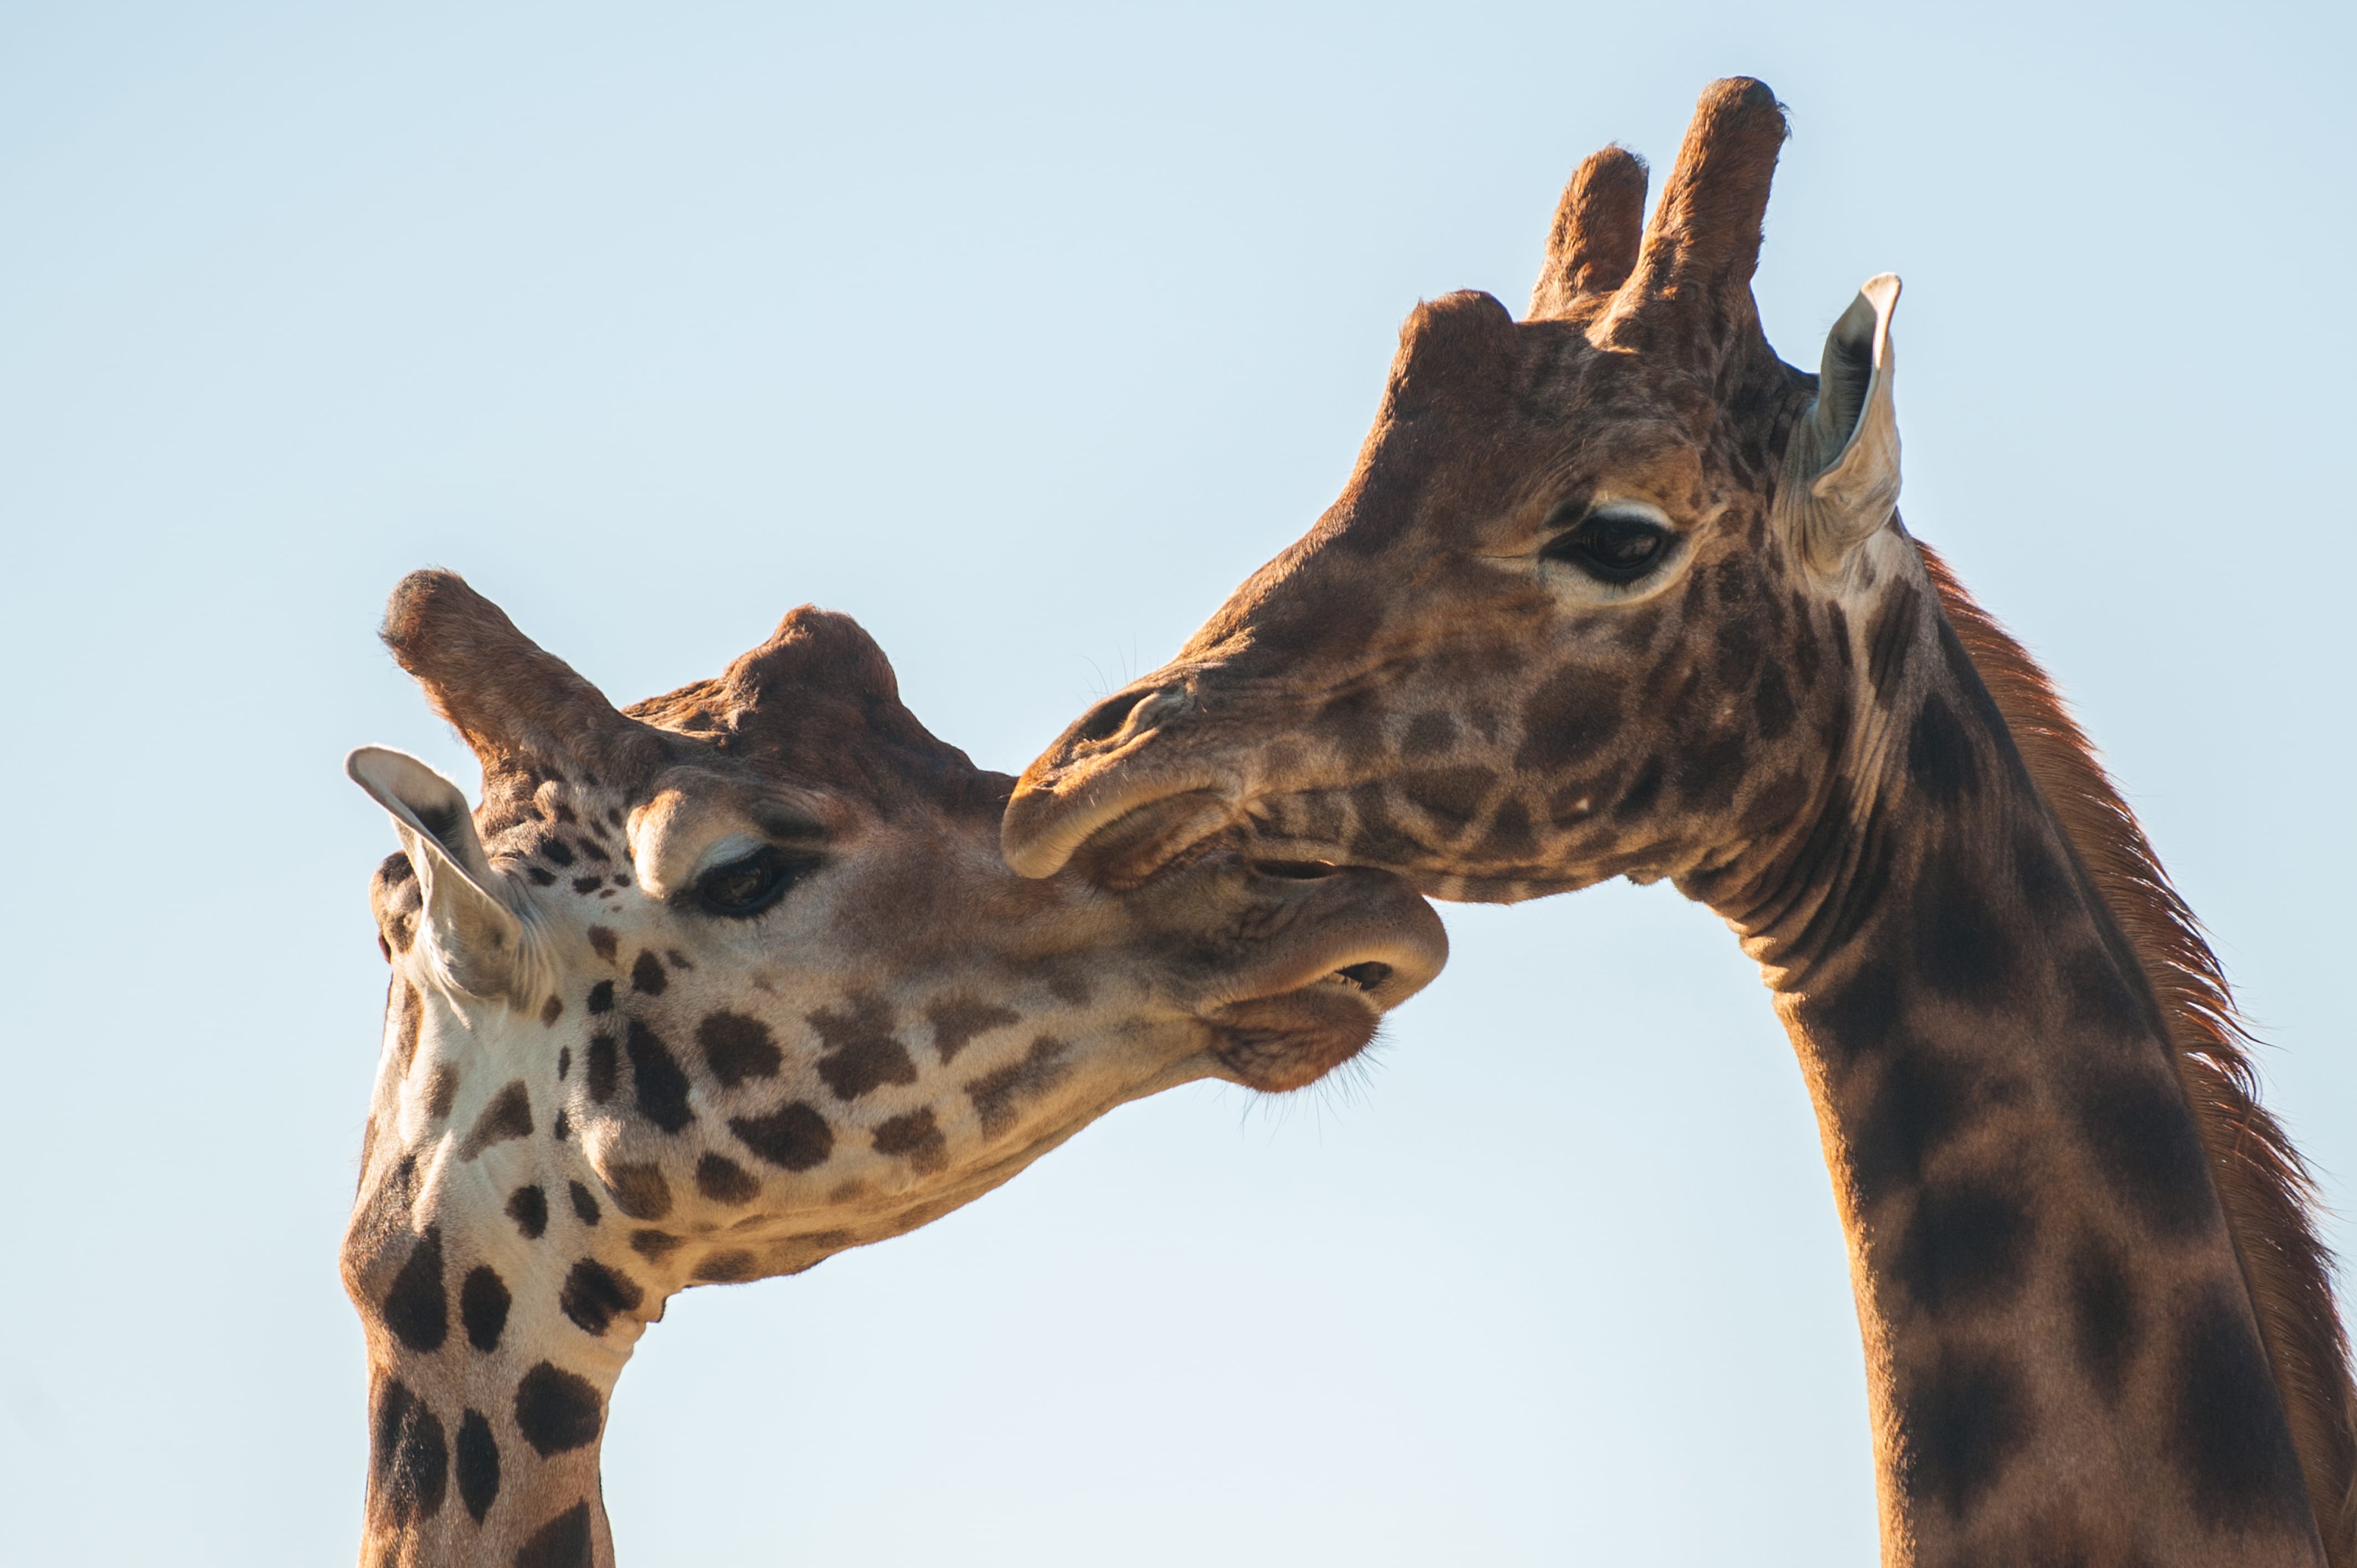 giraffes nuzzling each other